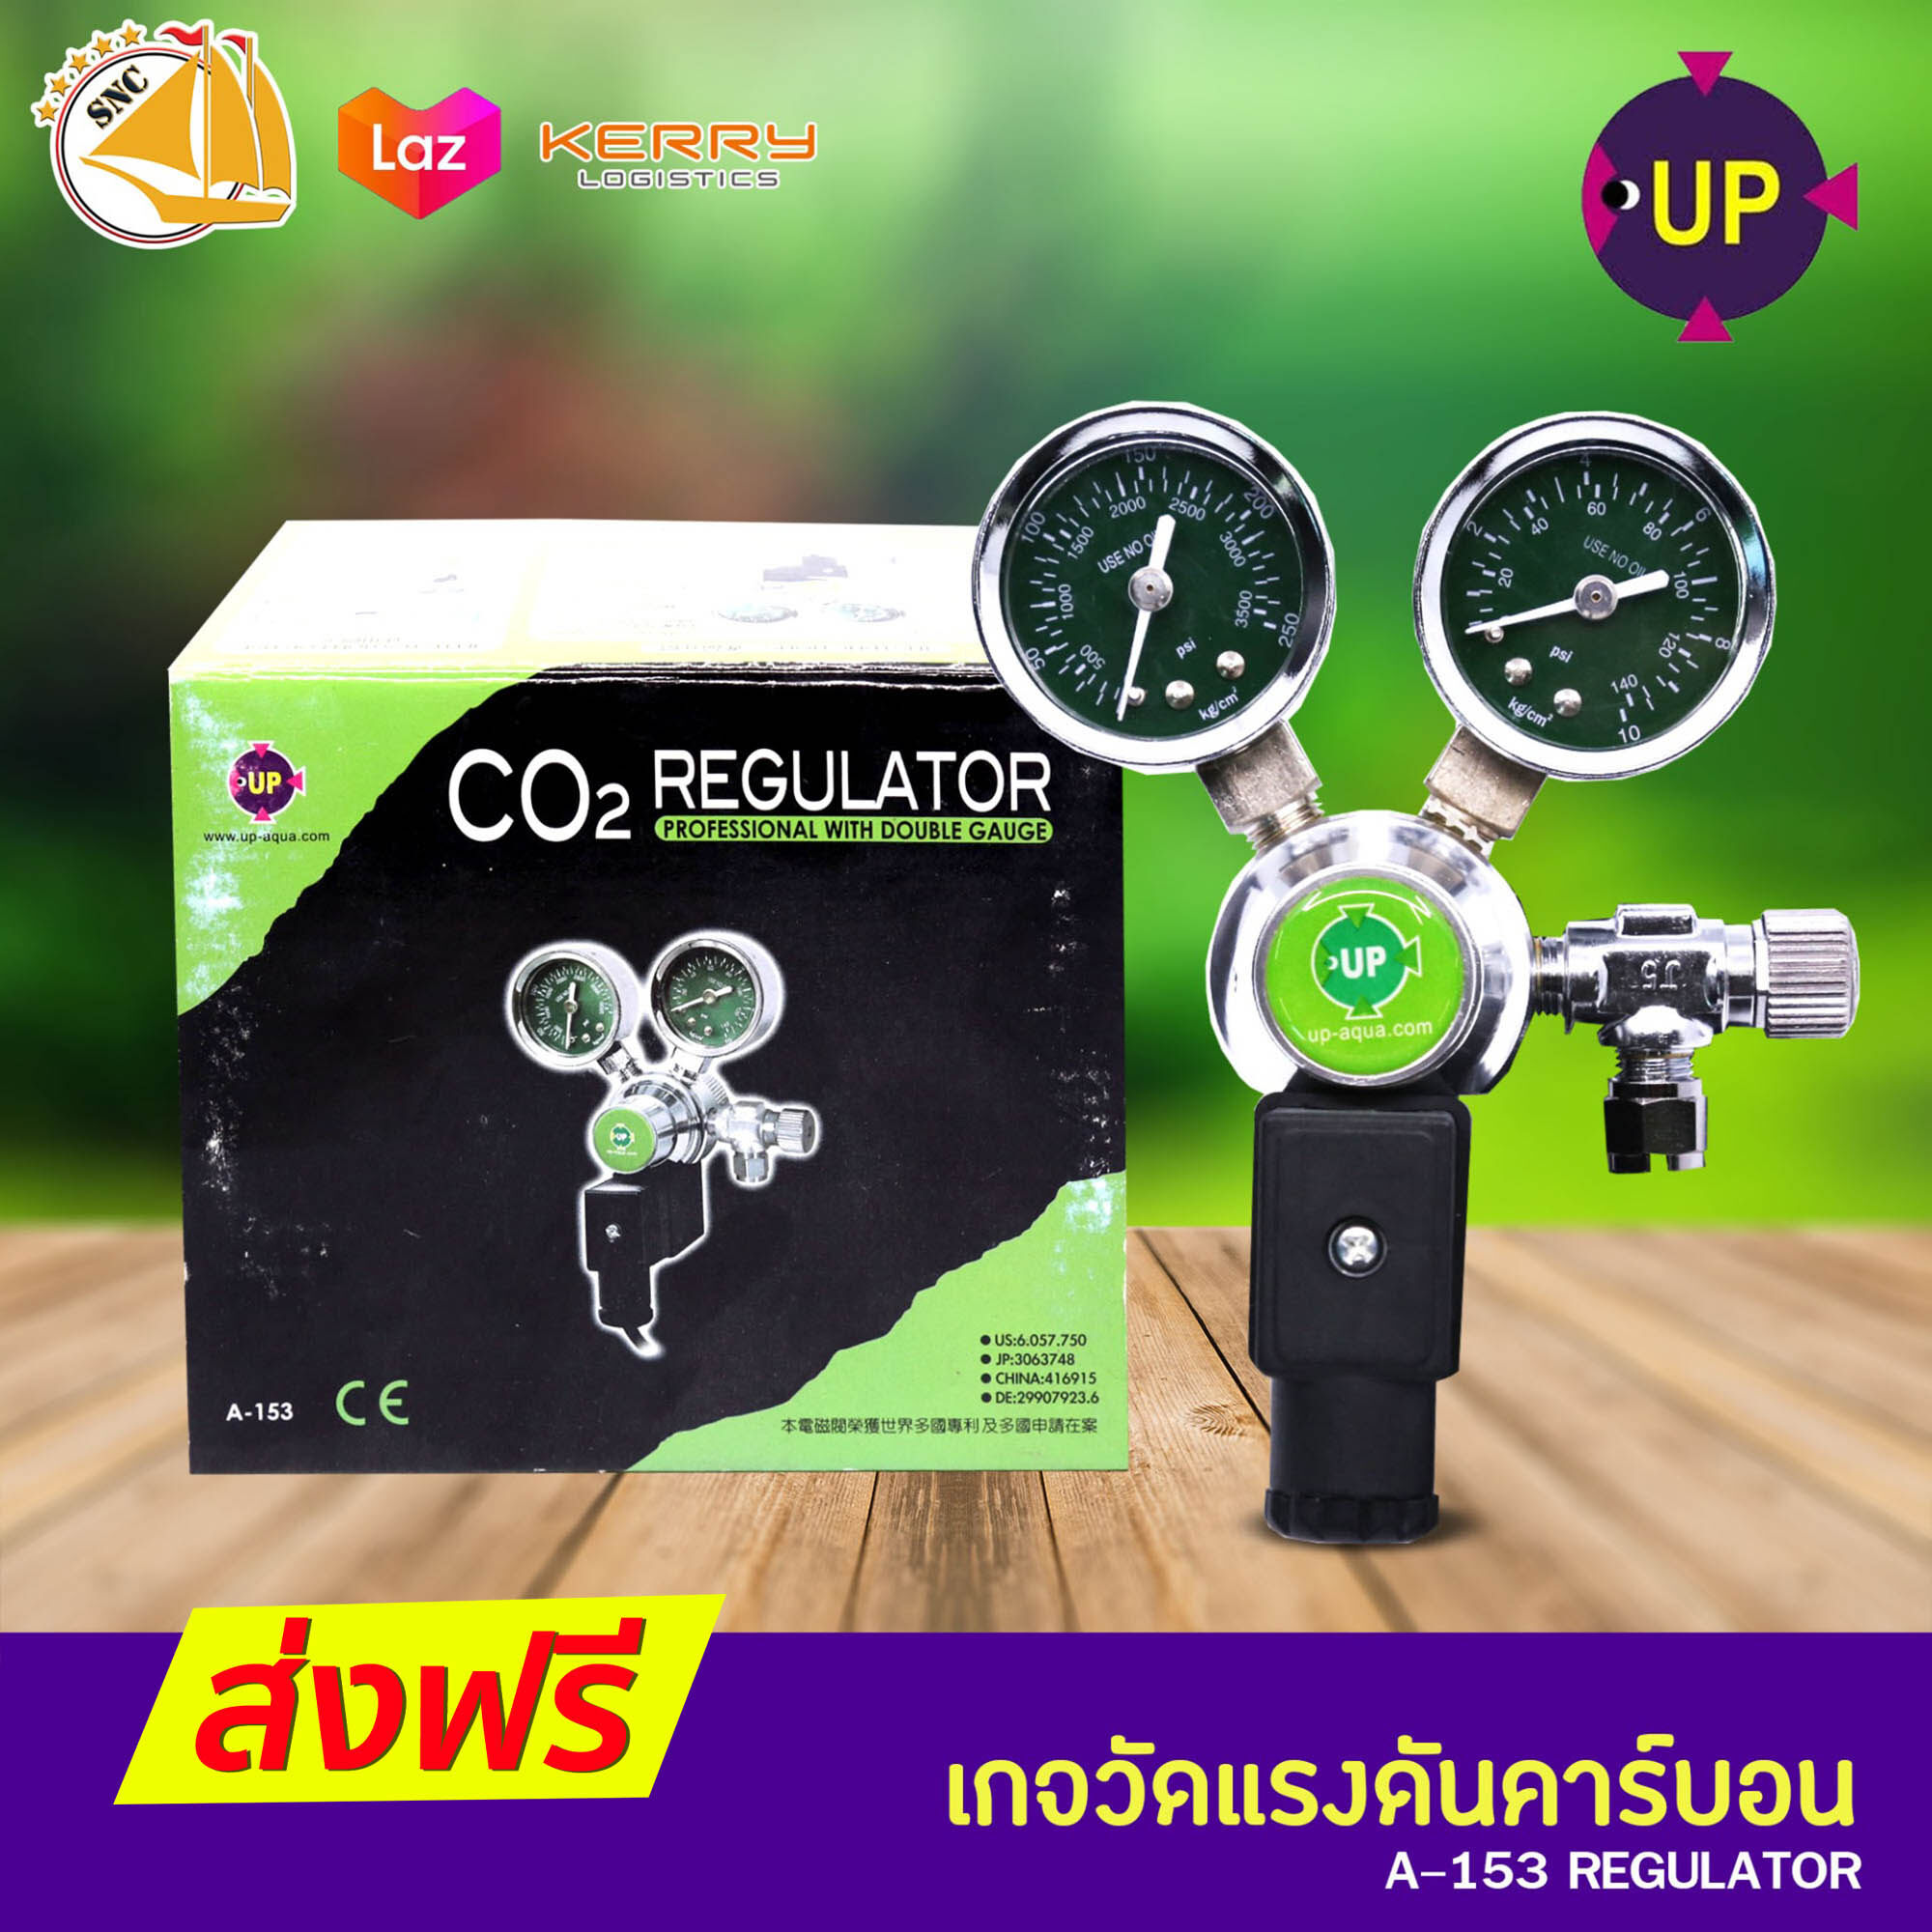 Up Aqua A-153 CO2 Regulator หัวต่อควบคุมถังCO2 แบบมีโซลินอยด์